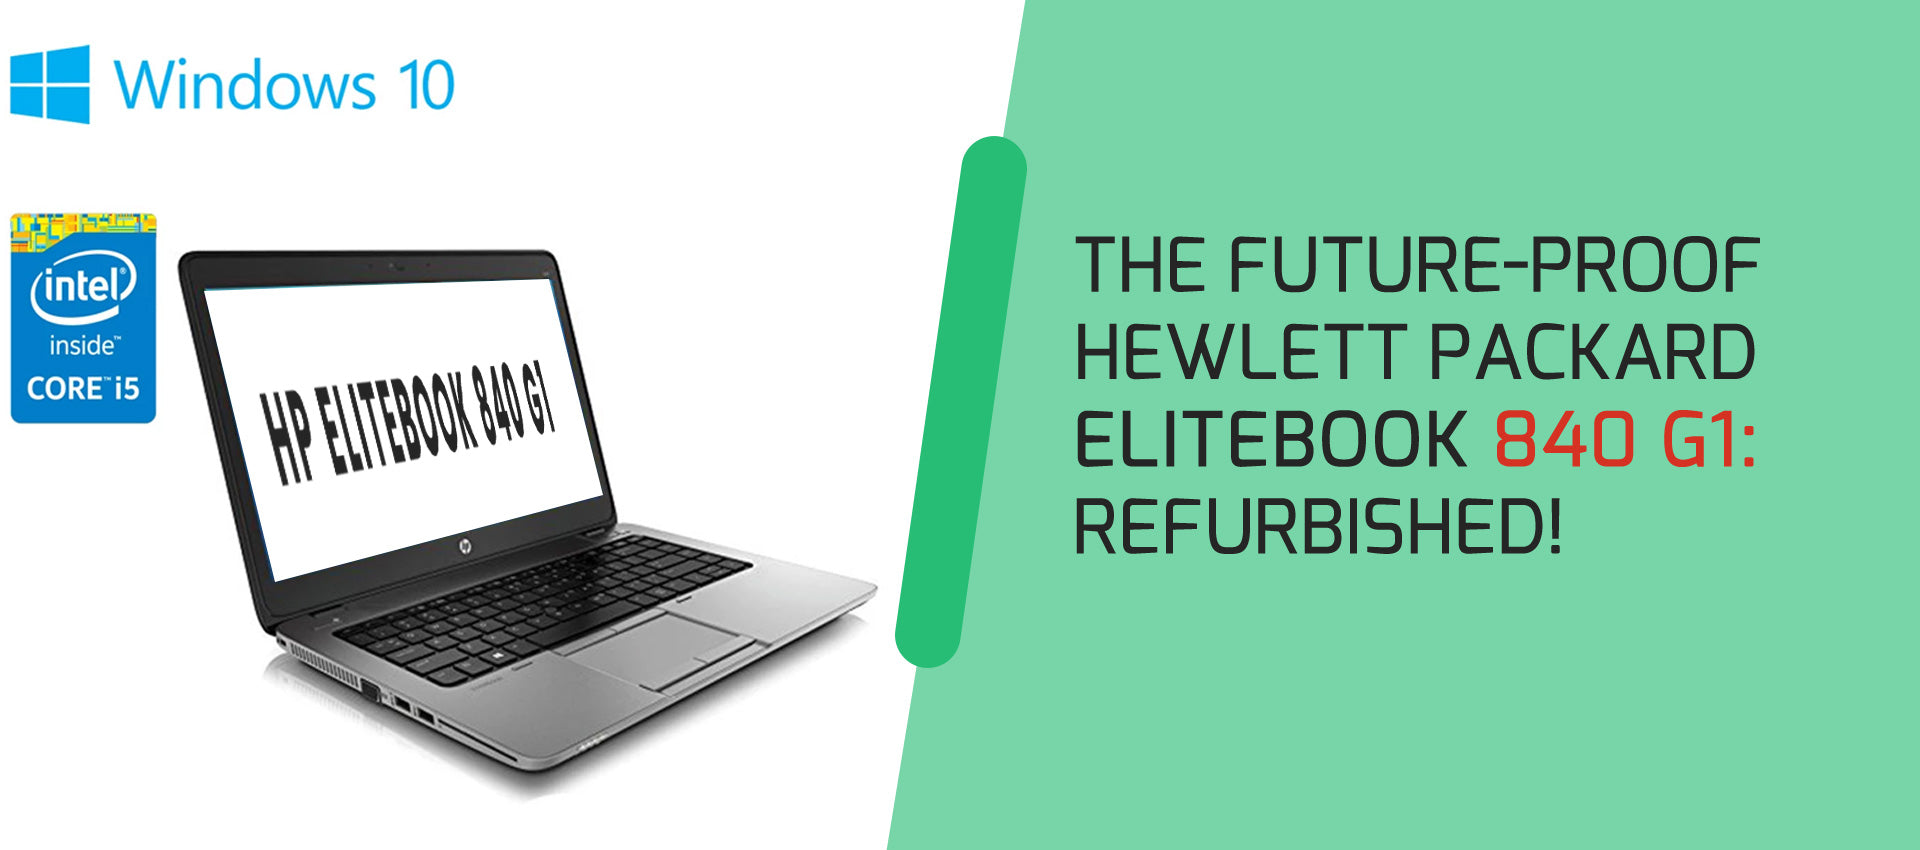 The Future-Proof Hewlett Packard EliteBook 840 G1- Refurbished!